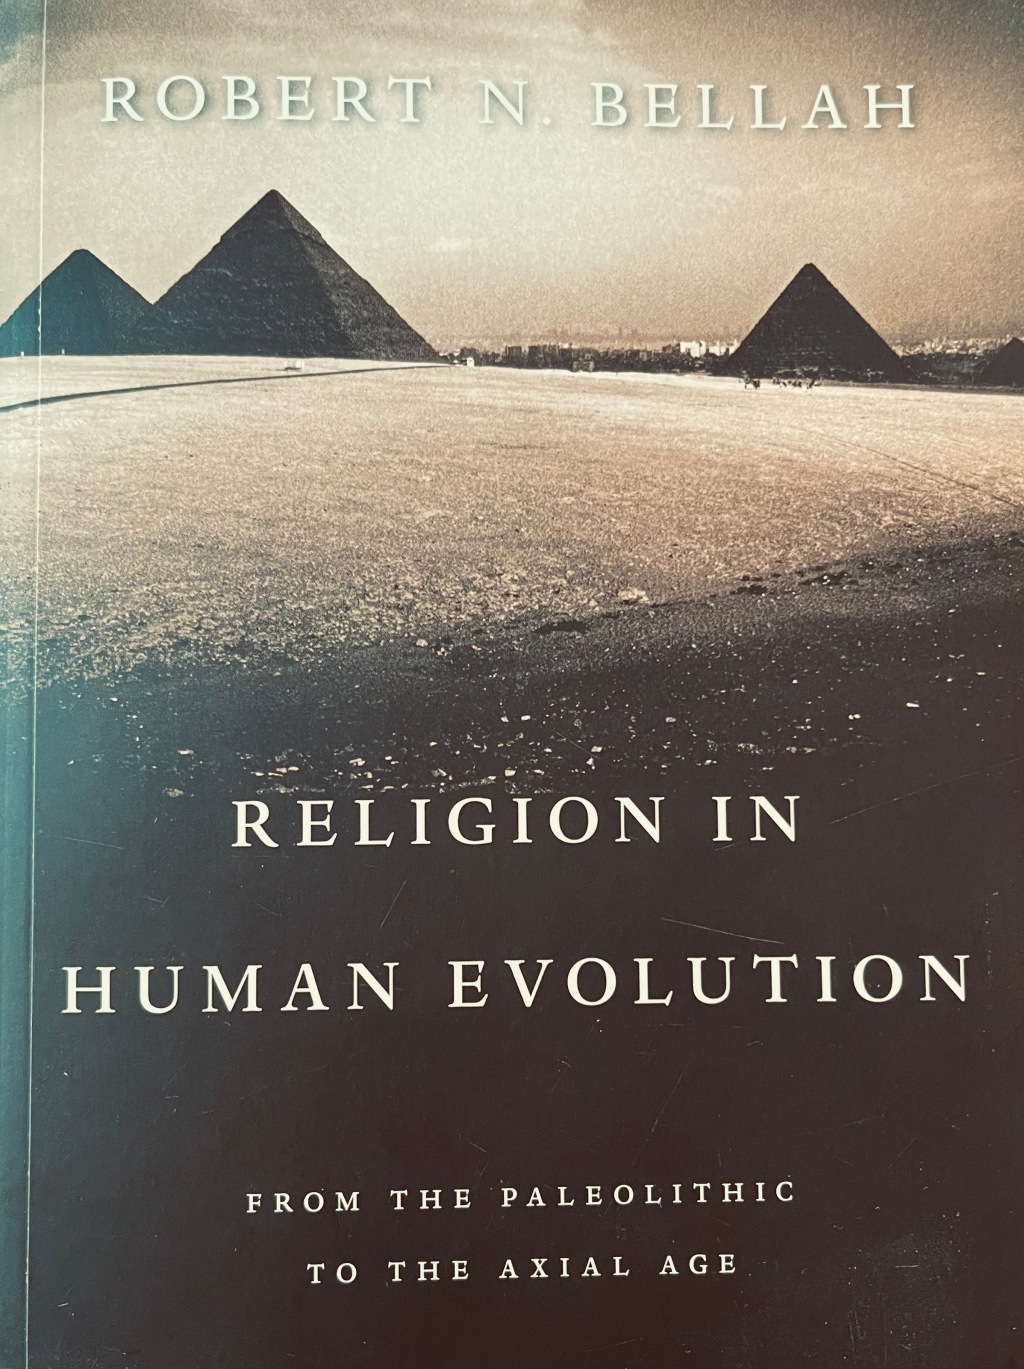 Robert Bellah’s Religion in Human Evolution